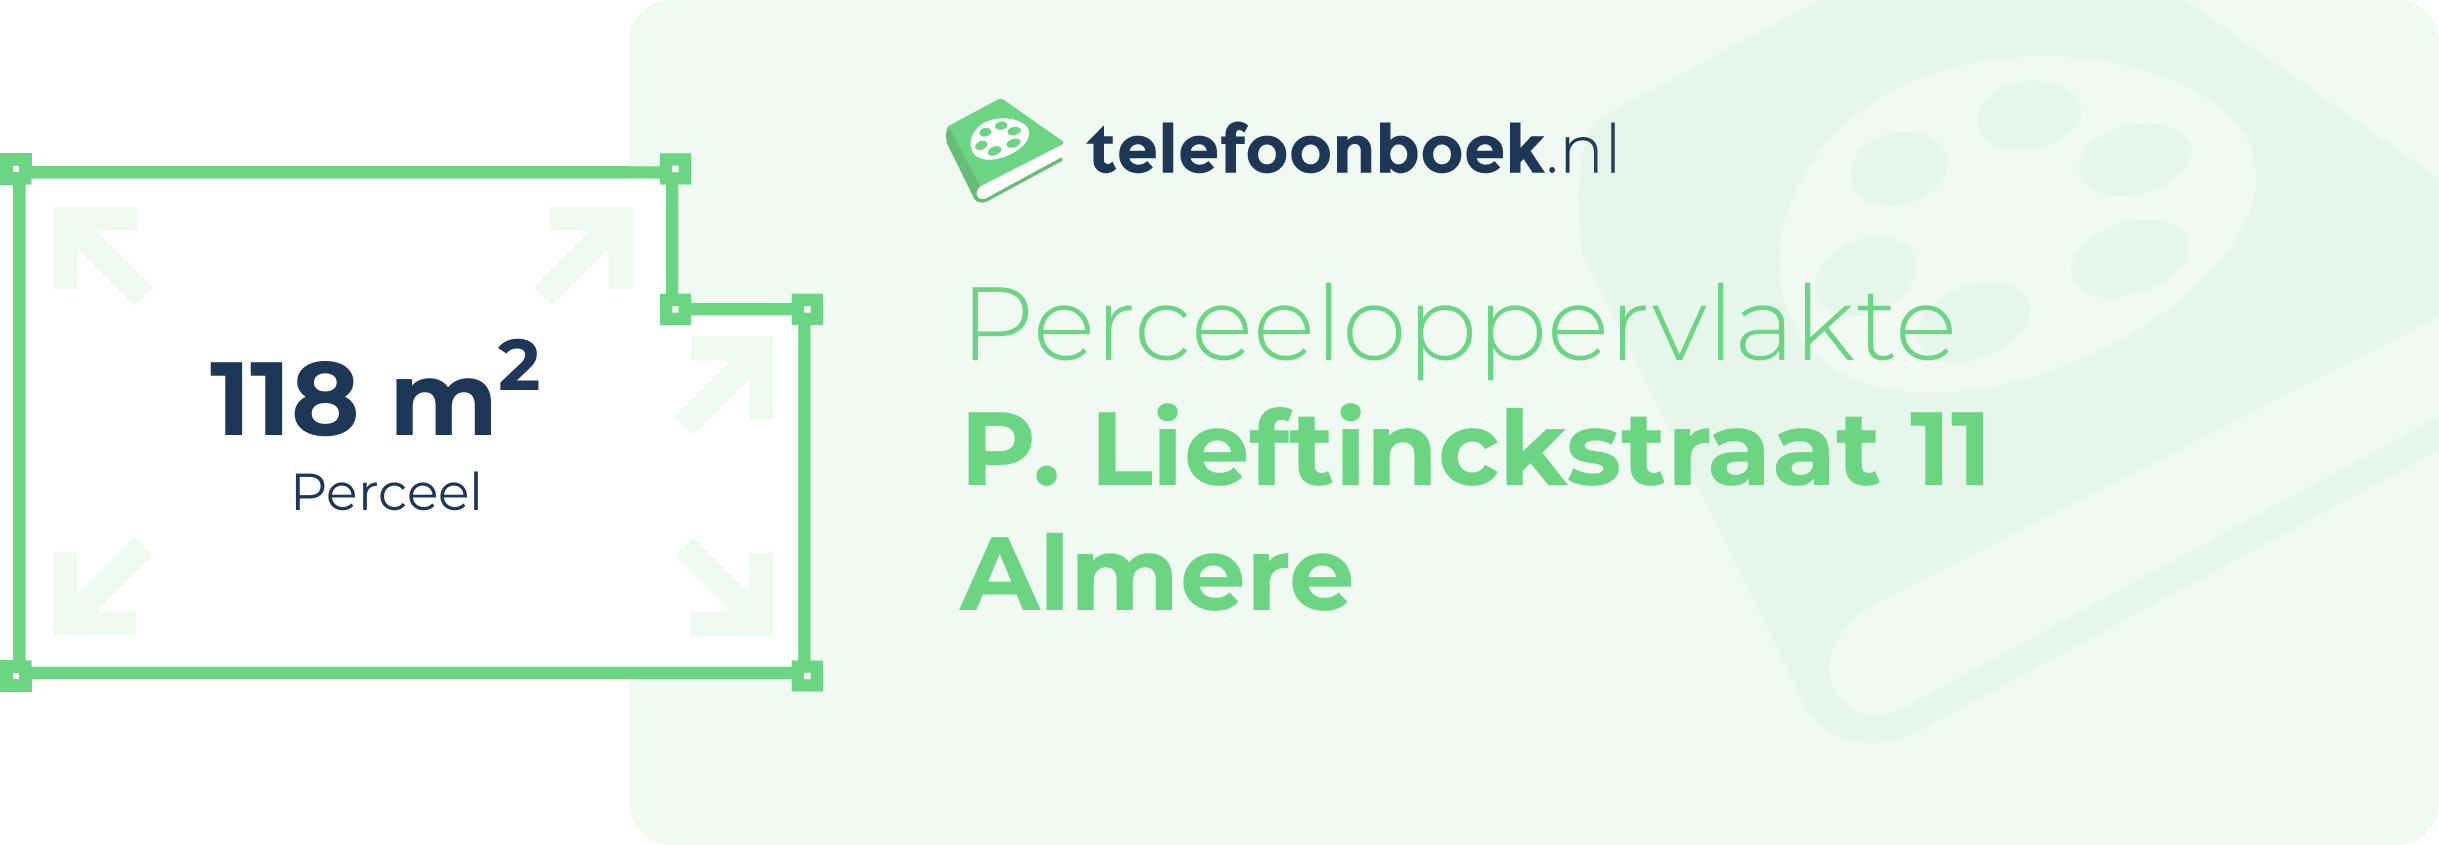 Perceeloppervlakte P. Lieftinckstraat 11 Almere